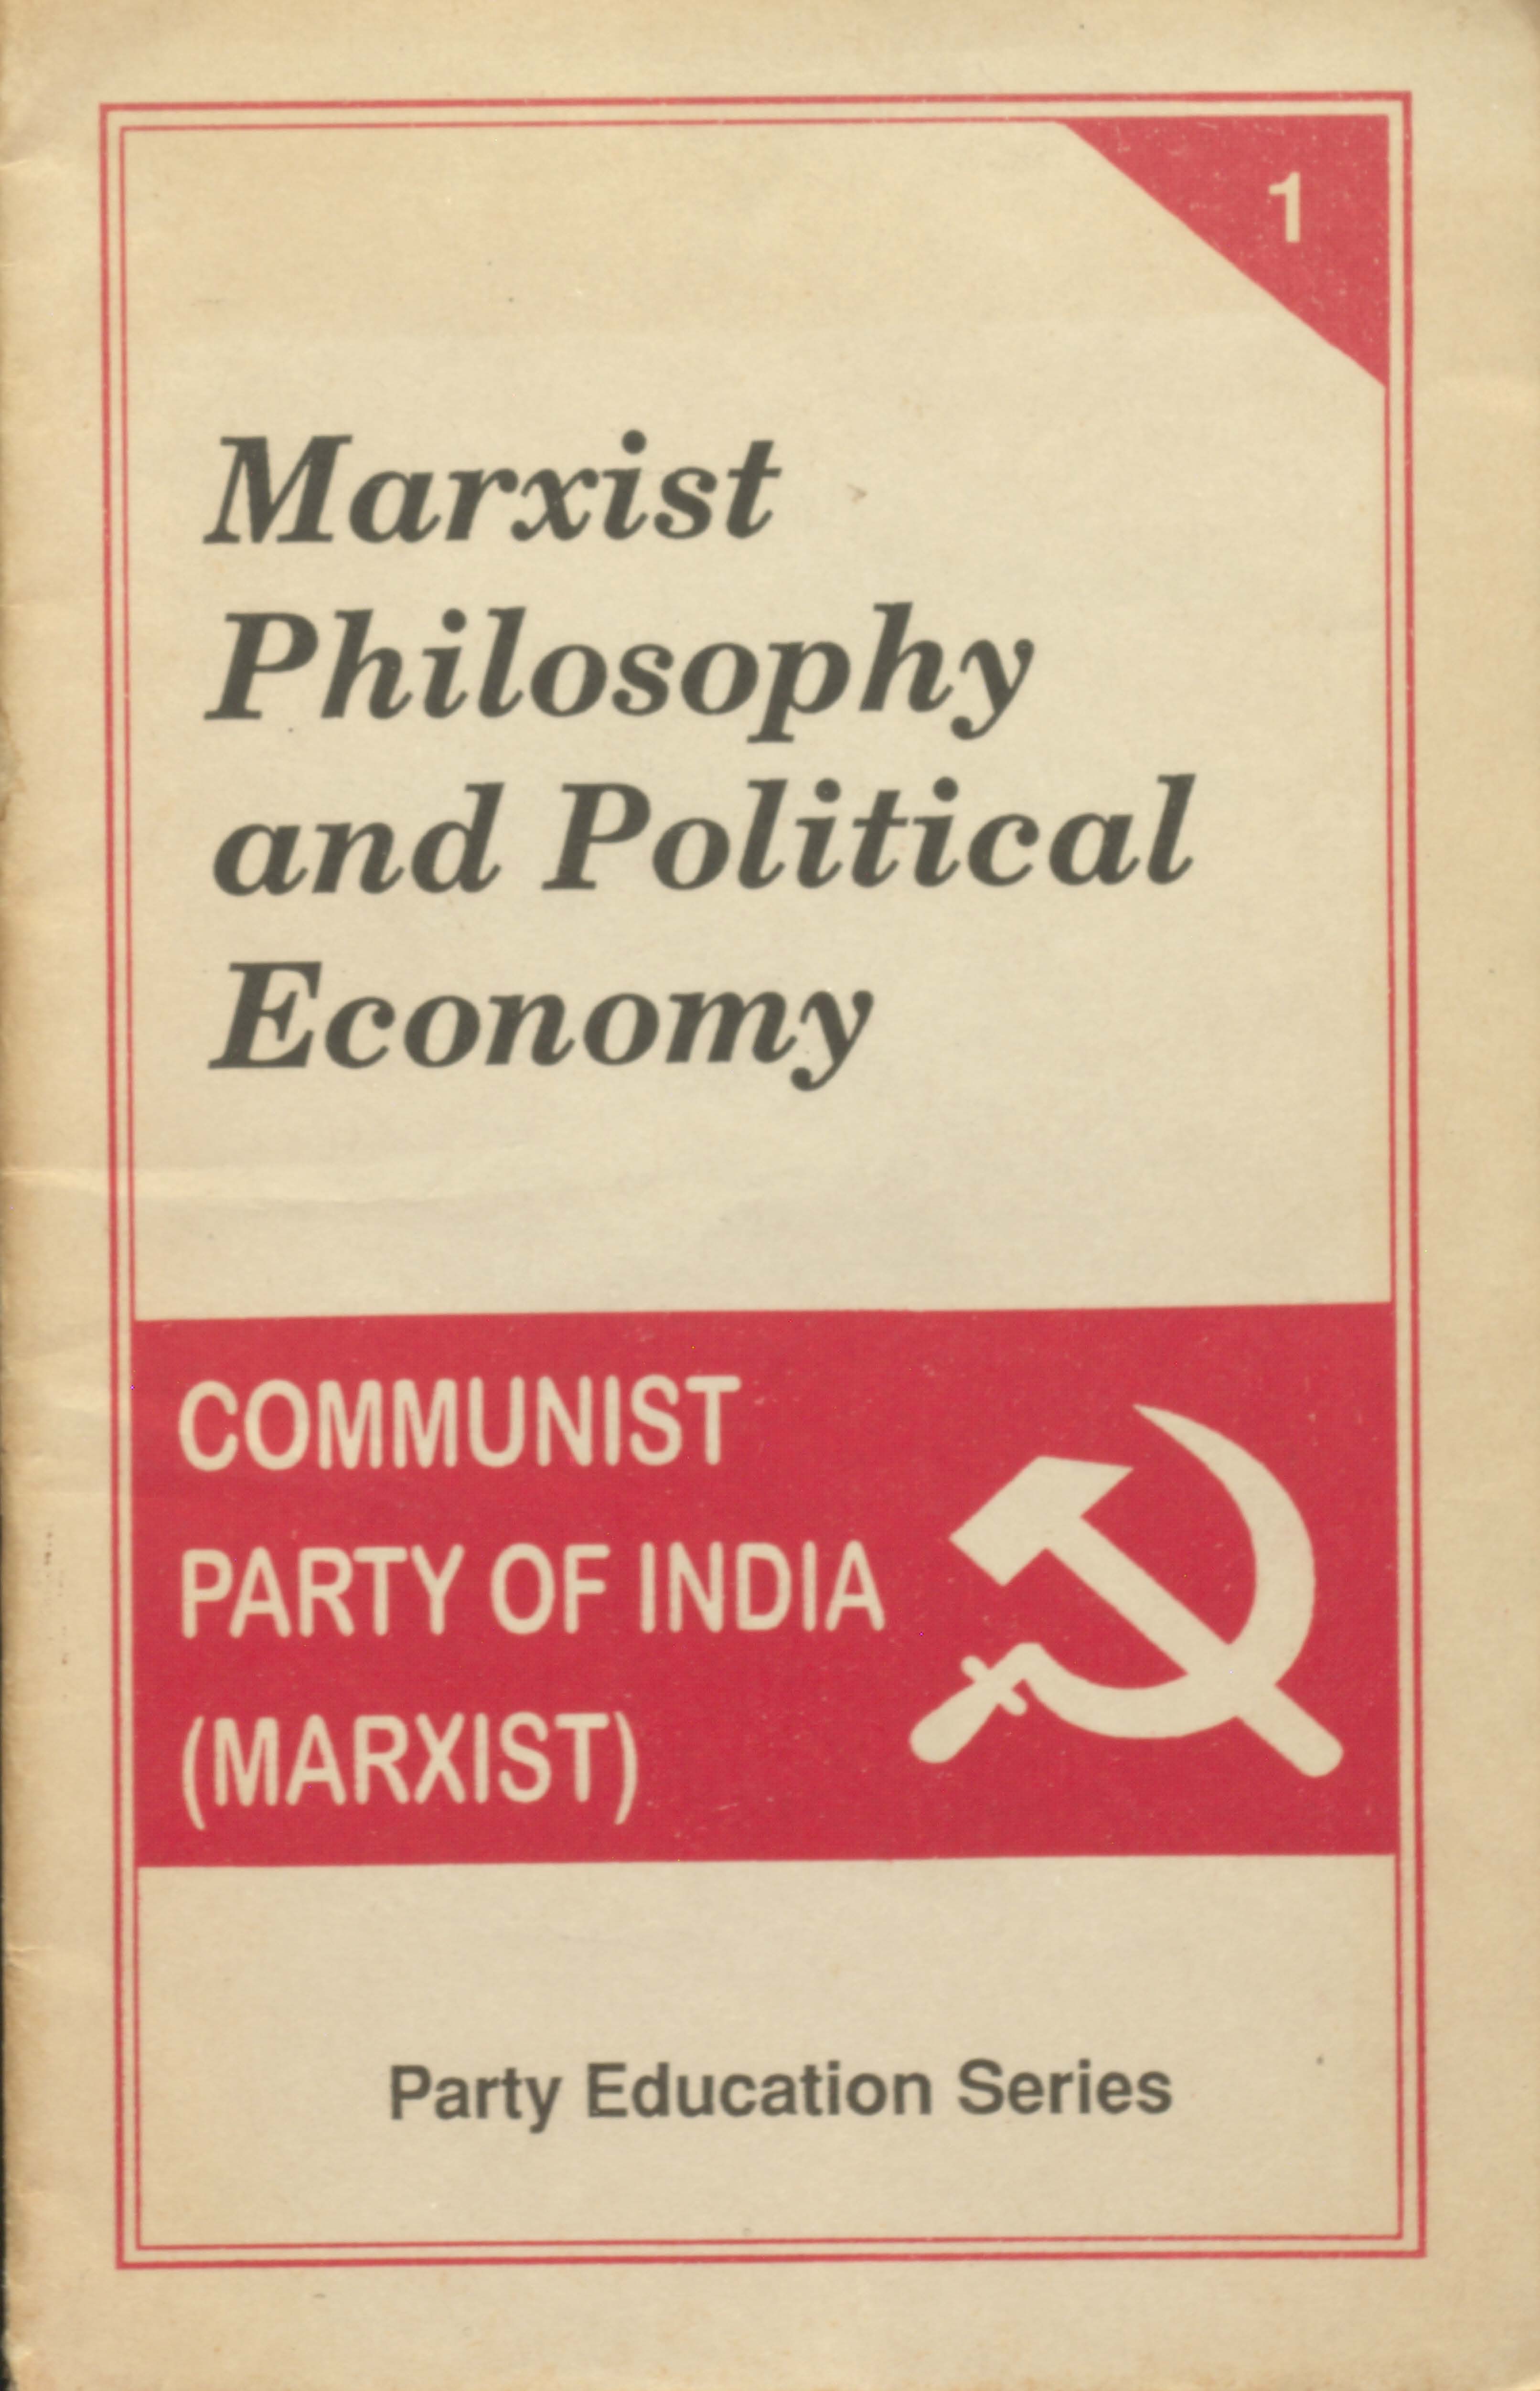 Marxist Philosophy and Politiacal Economy (cpi)